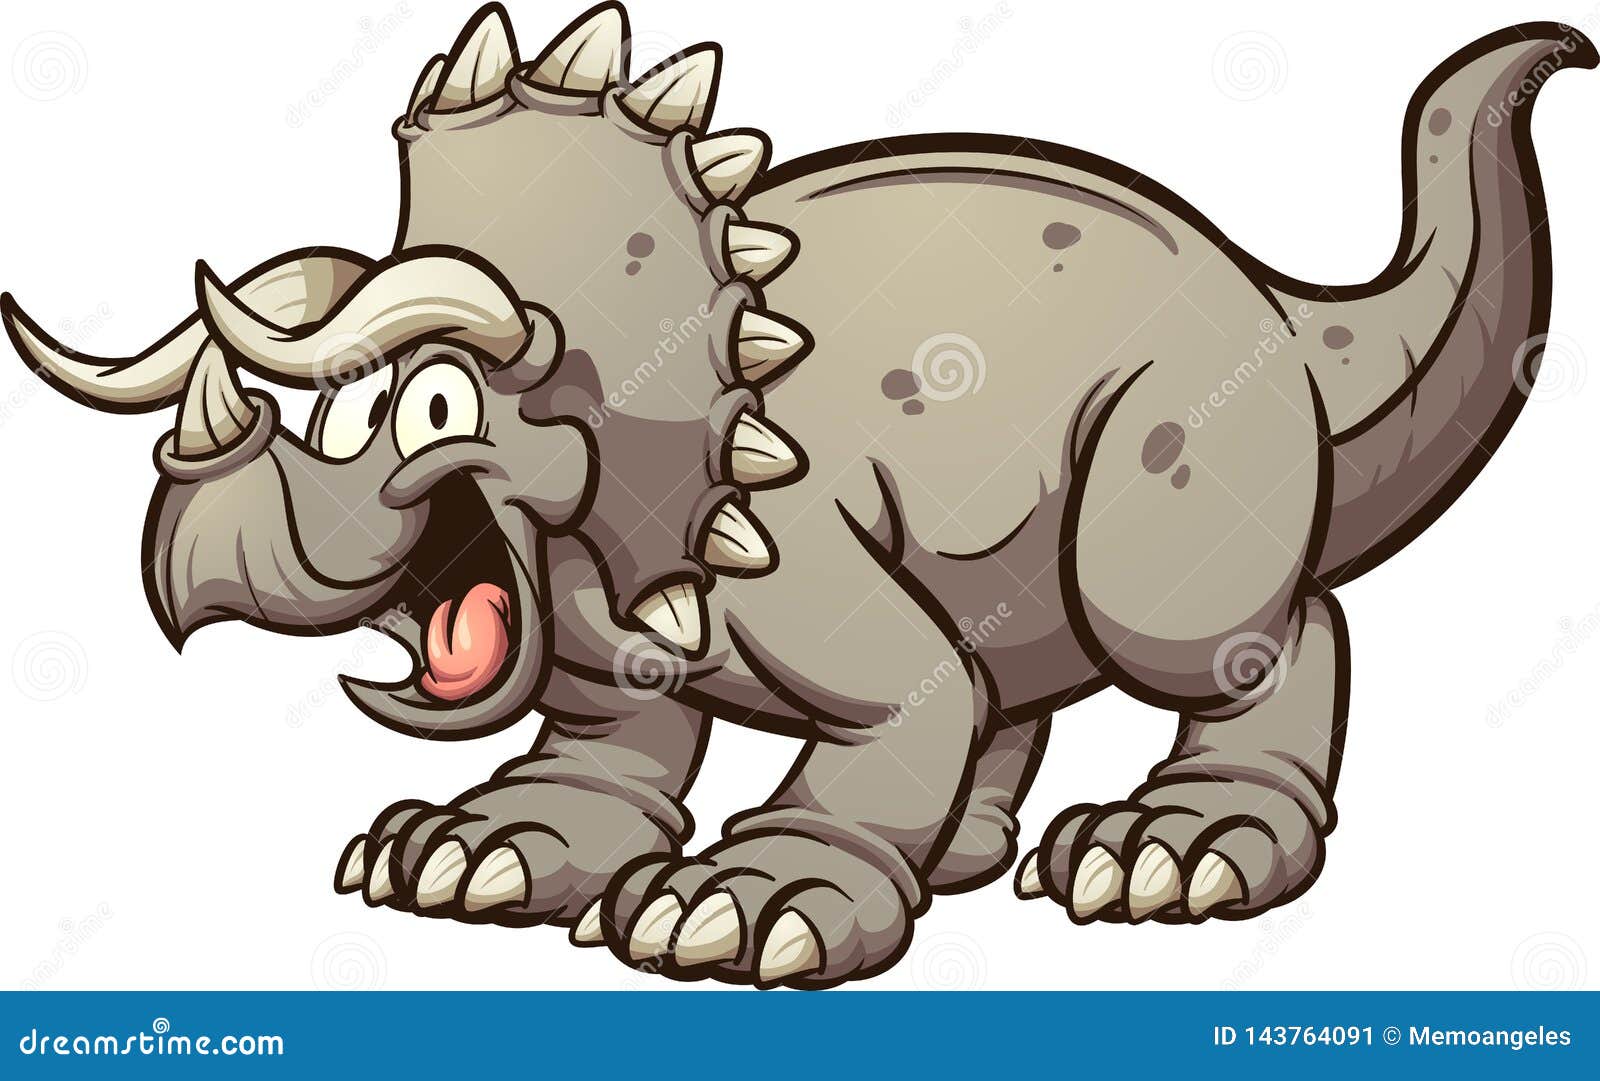 Cartoon Triceratops Stock Illustrations 7 052 Cartoon Triceratops Stock Illustrations Vectors Clipart Dreamstime